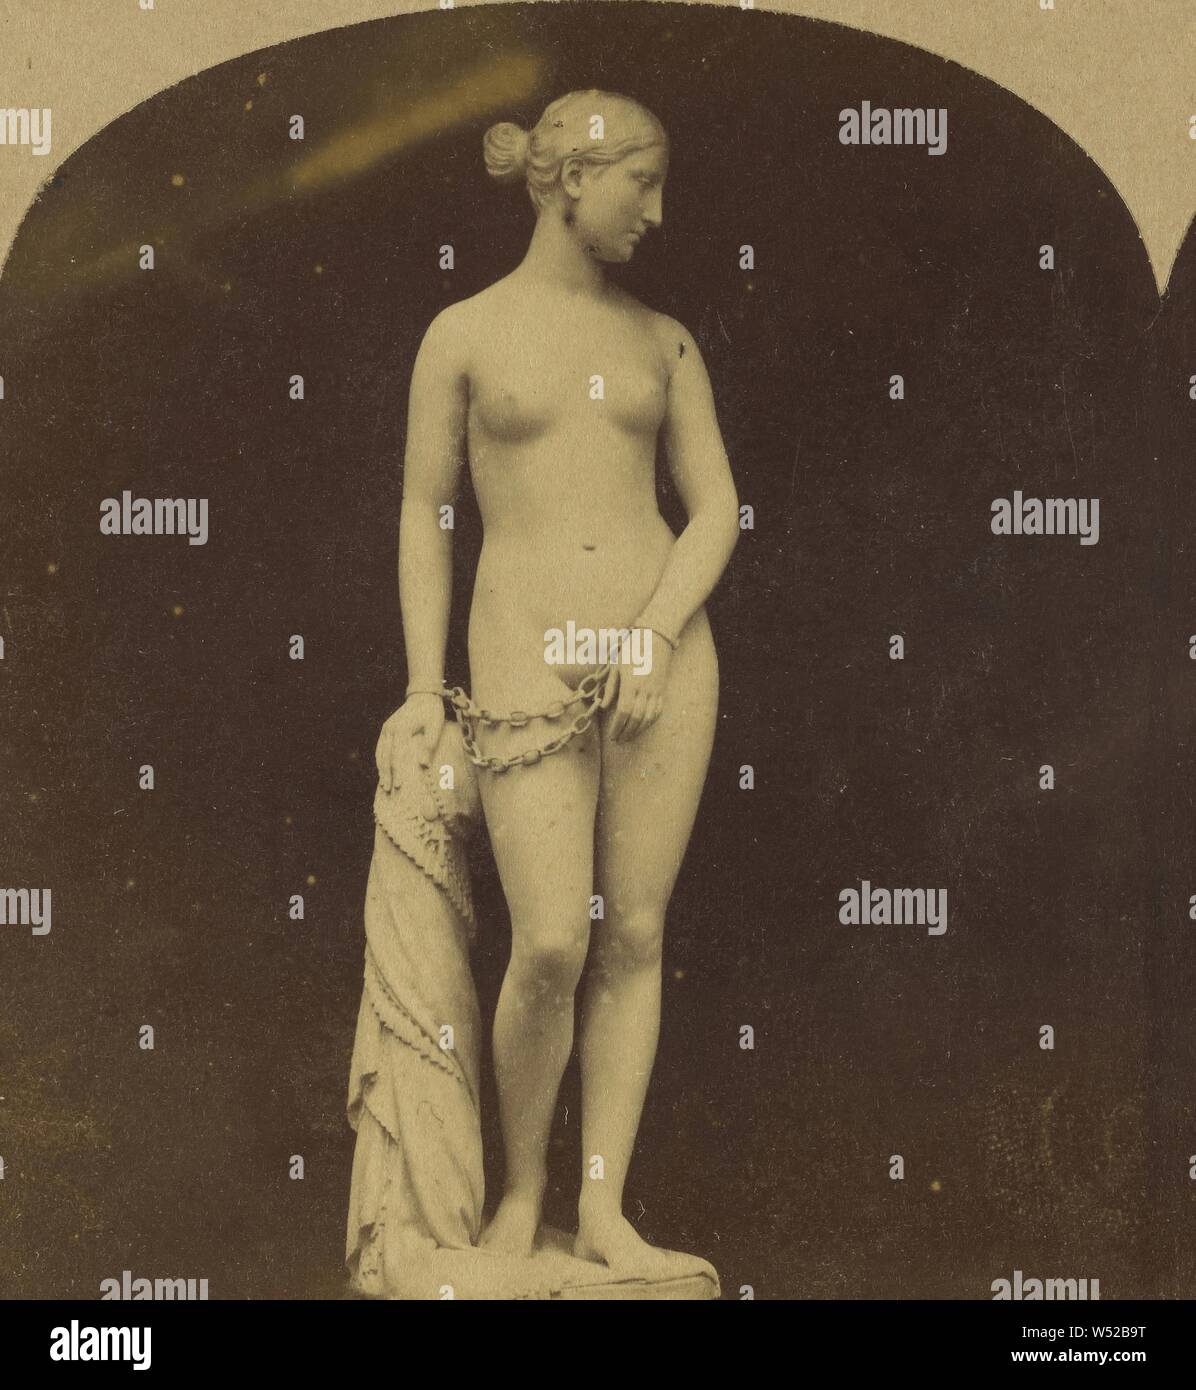 El Esclavo griego. Por Hiram Powers., London Stereoscopic Company (activo 1854 - 1890), alrededor de 1860, albúmina imprimir plata Foto de stock